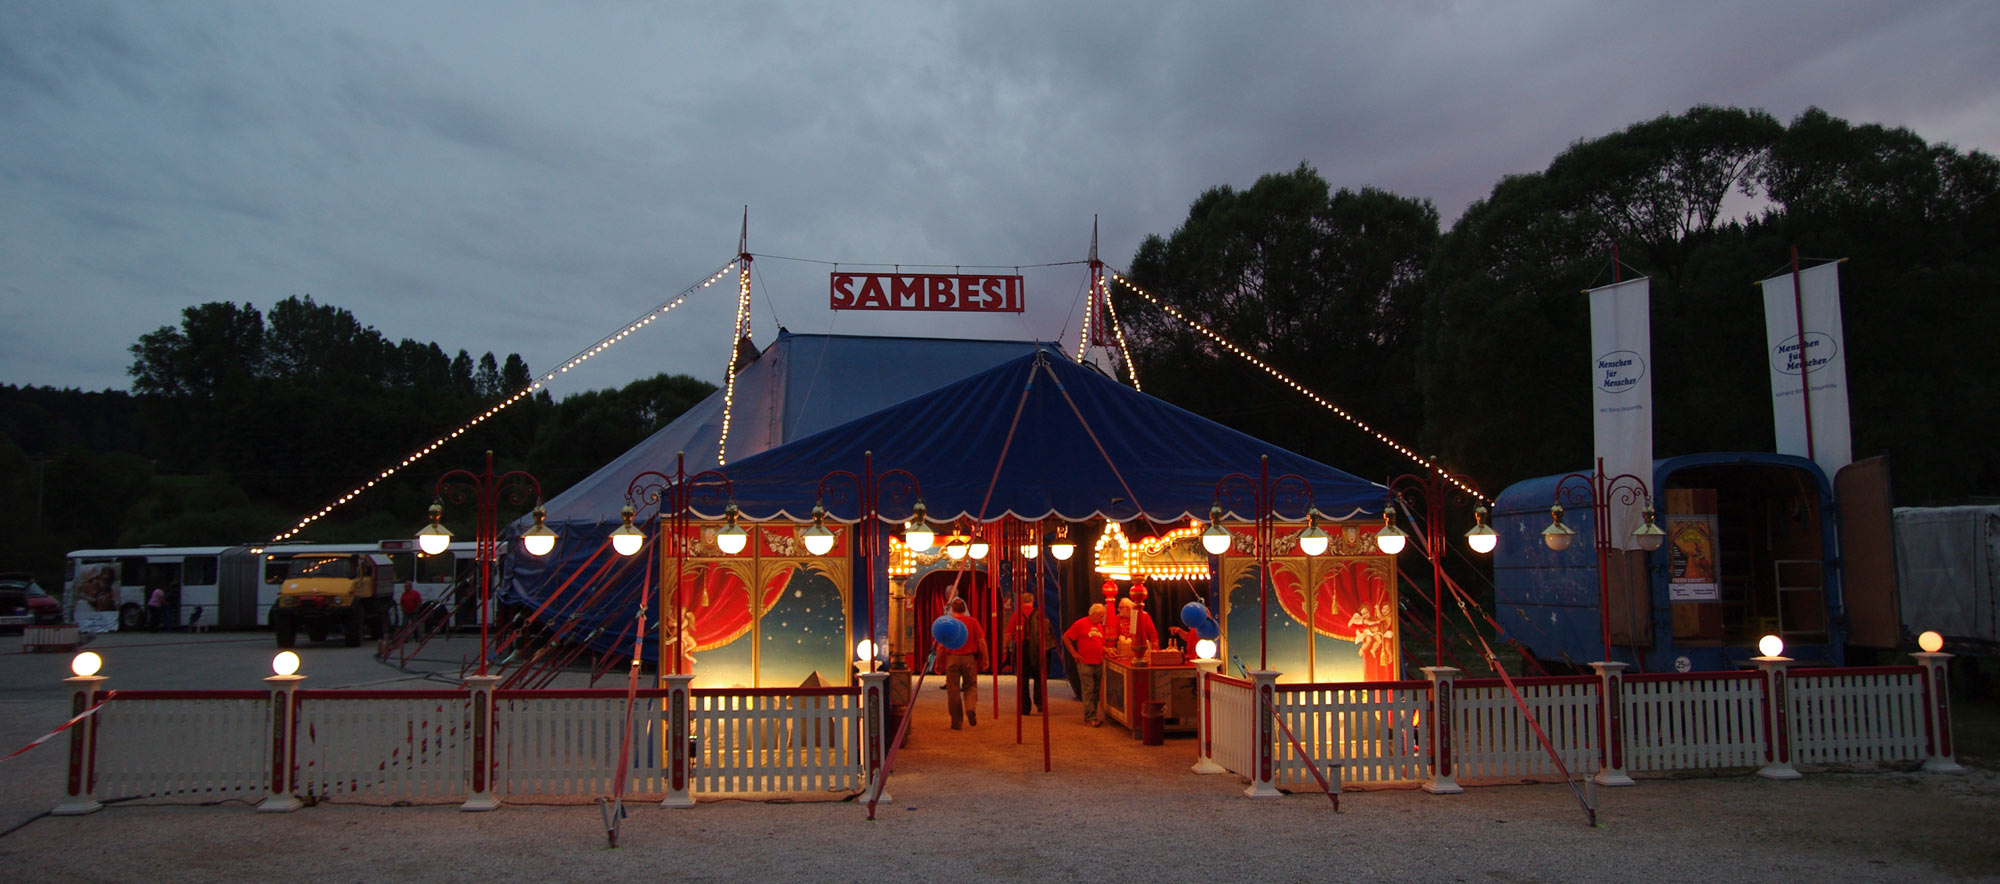 Circus Sambesi